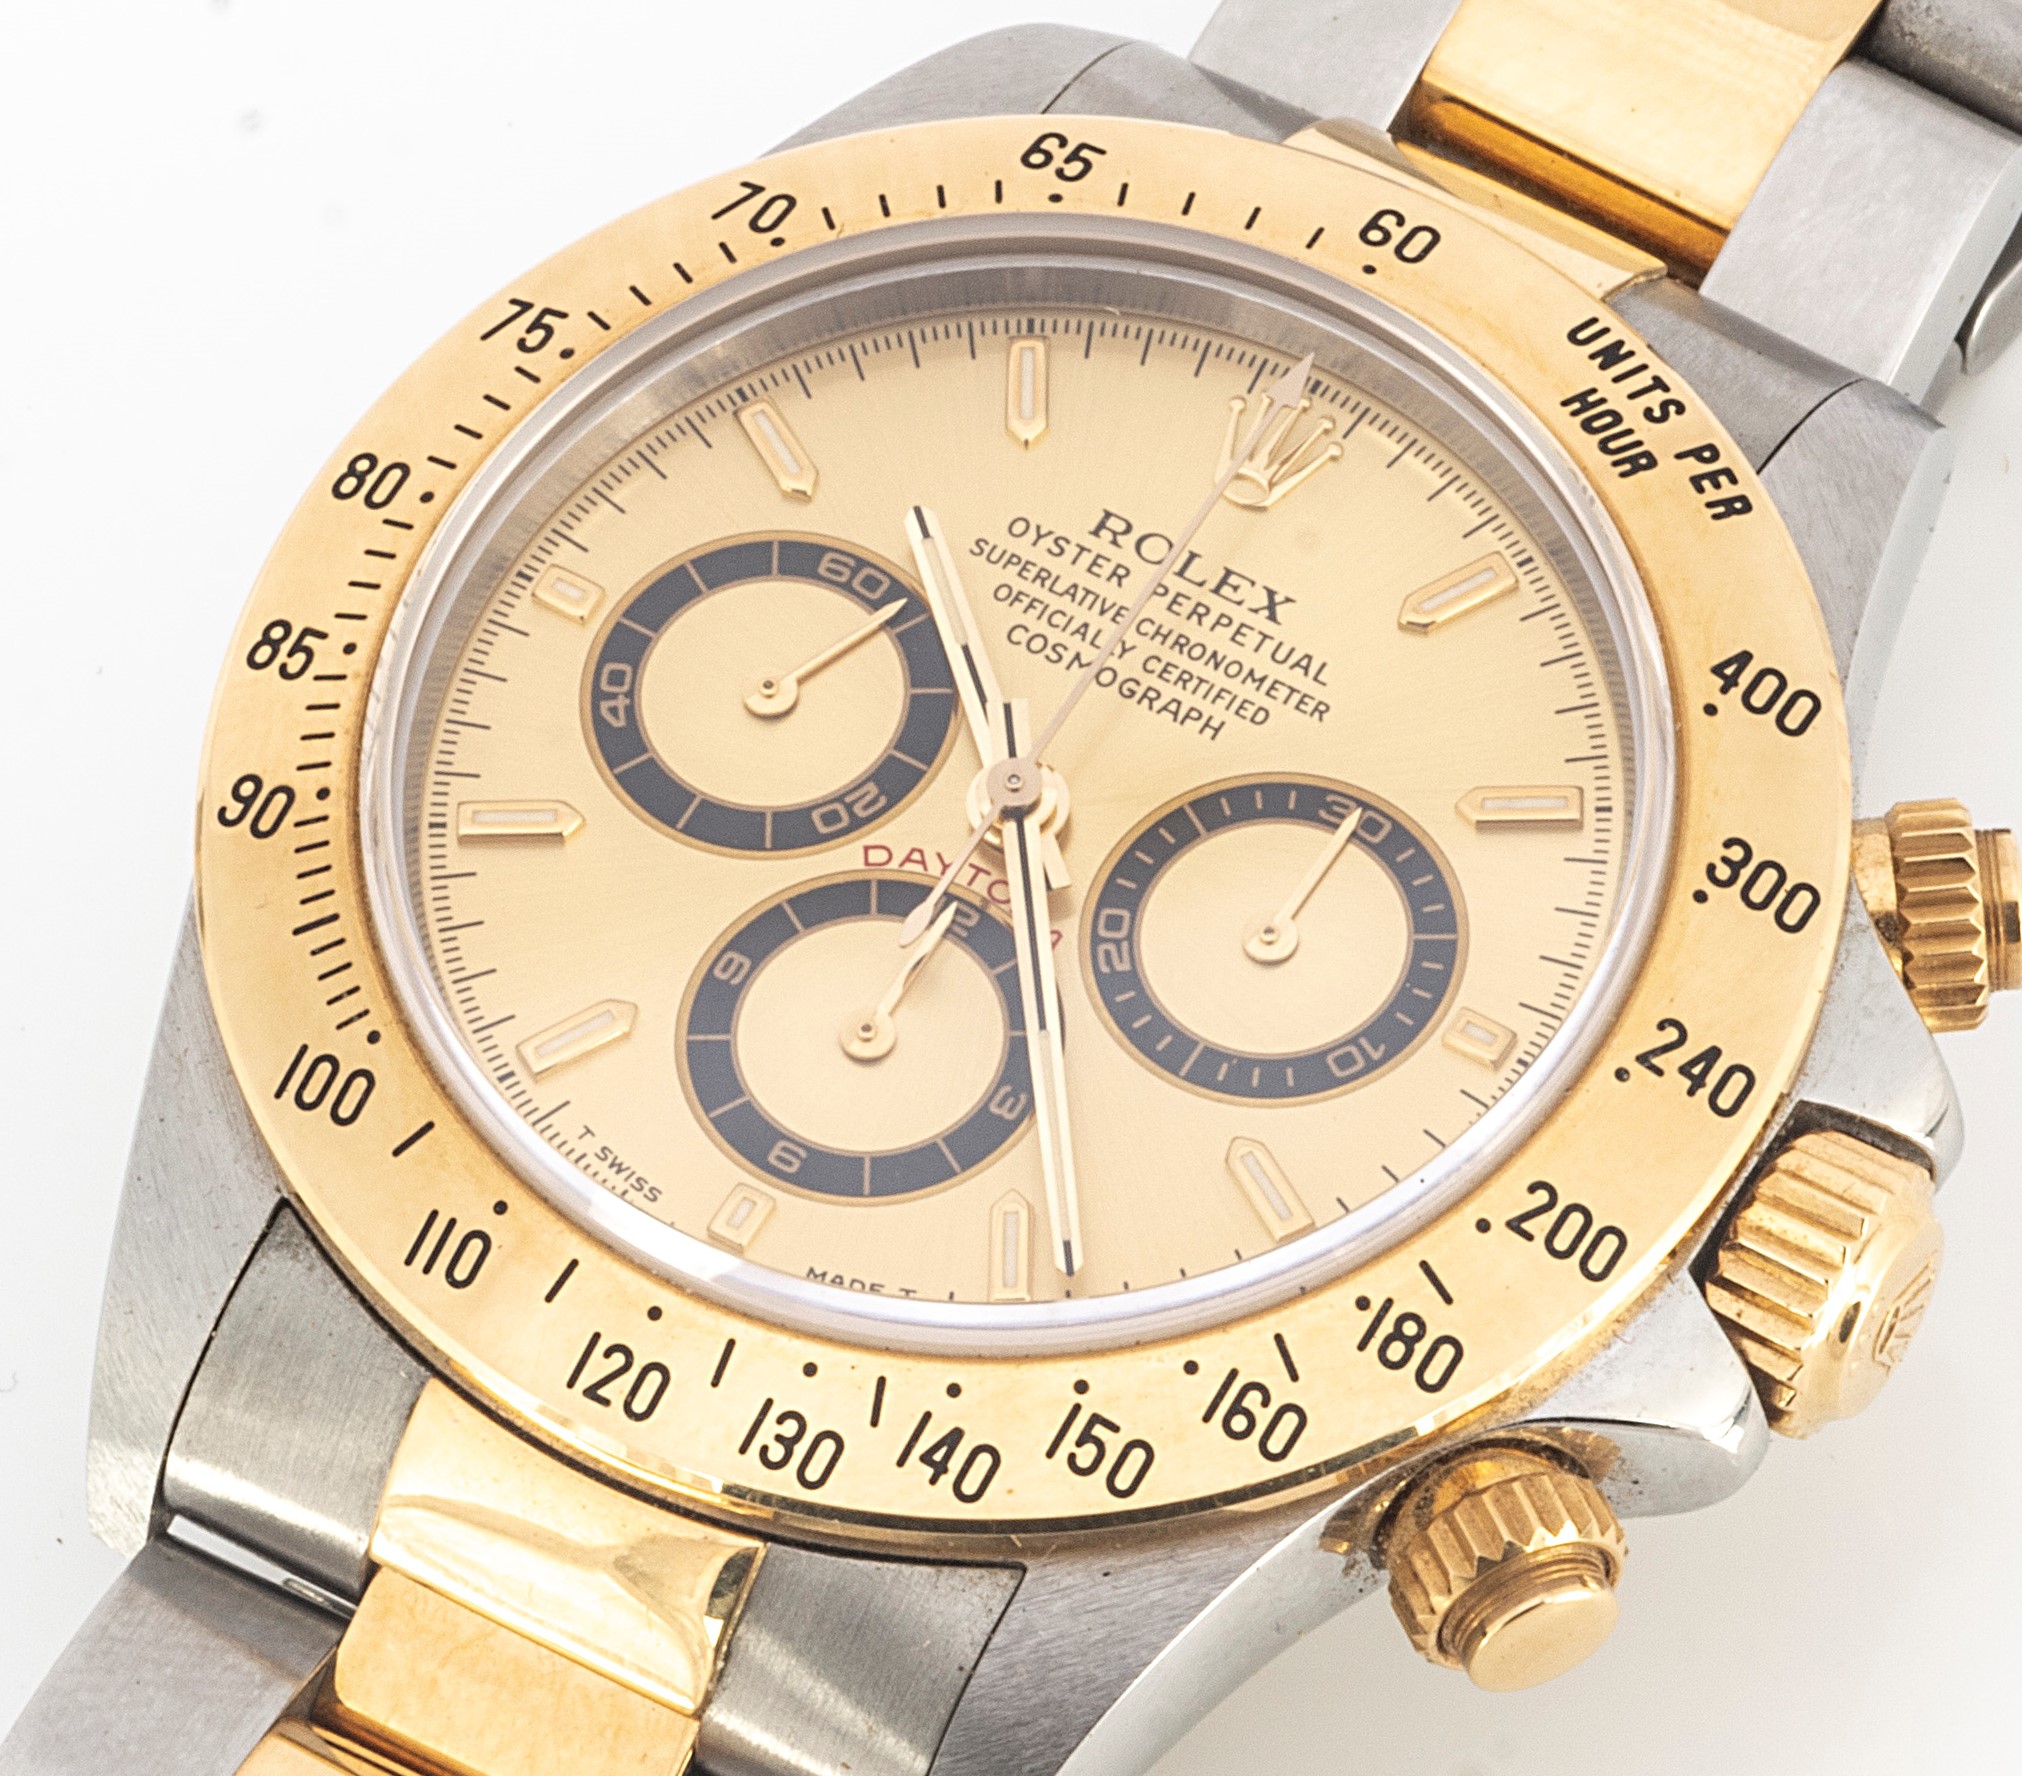 Watch & Clock Auction